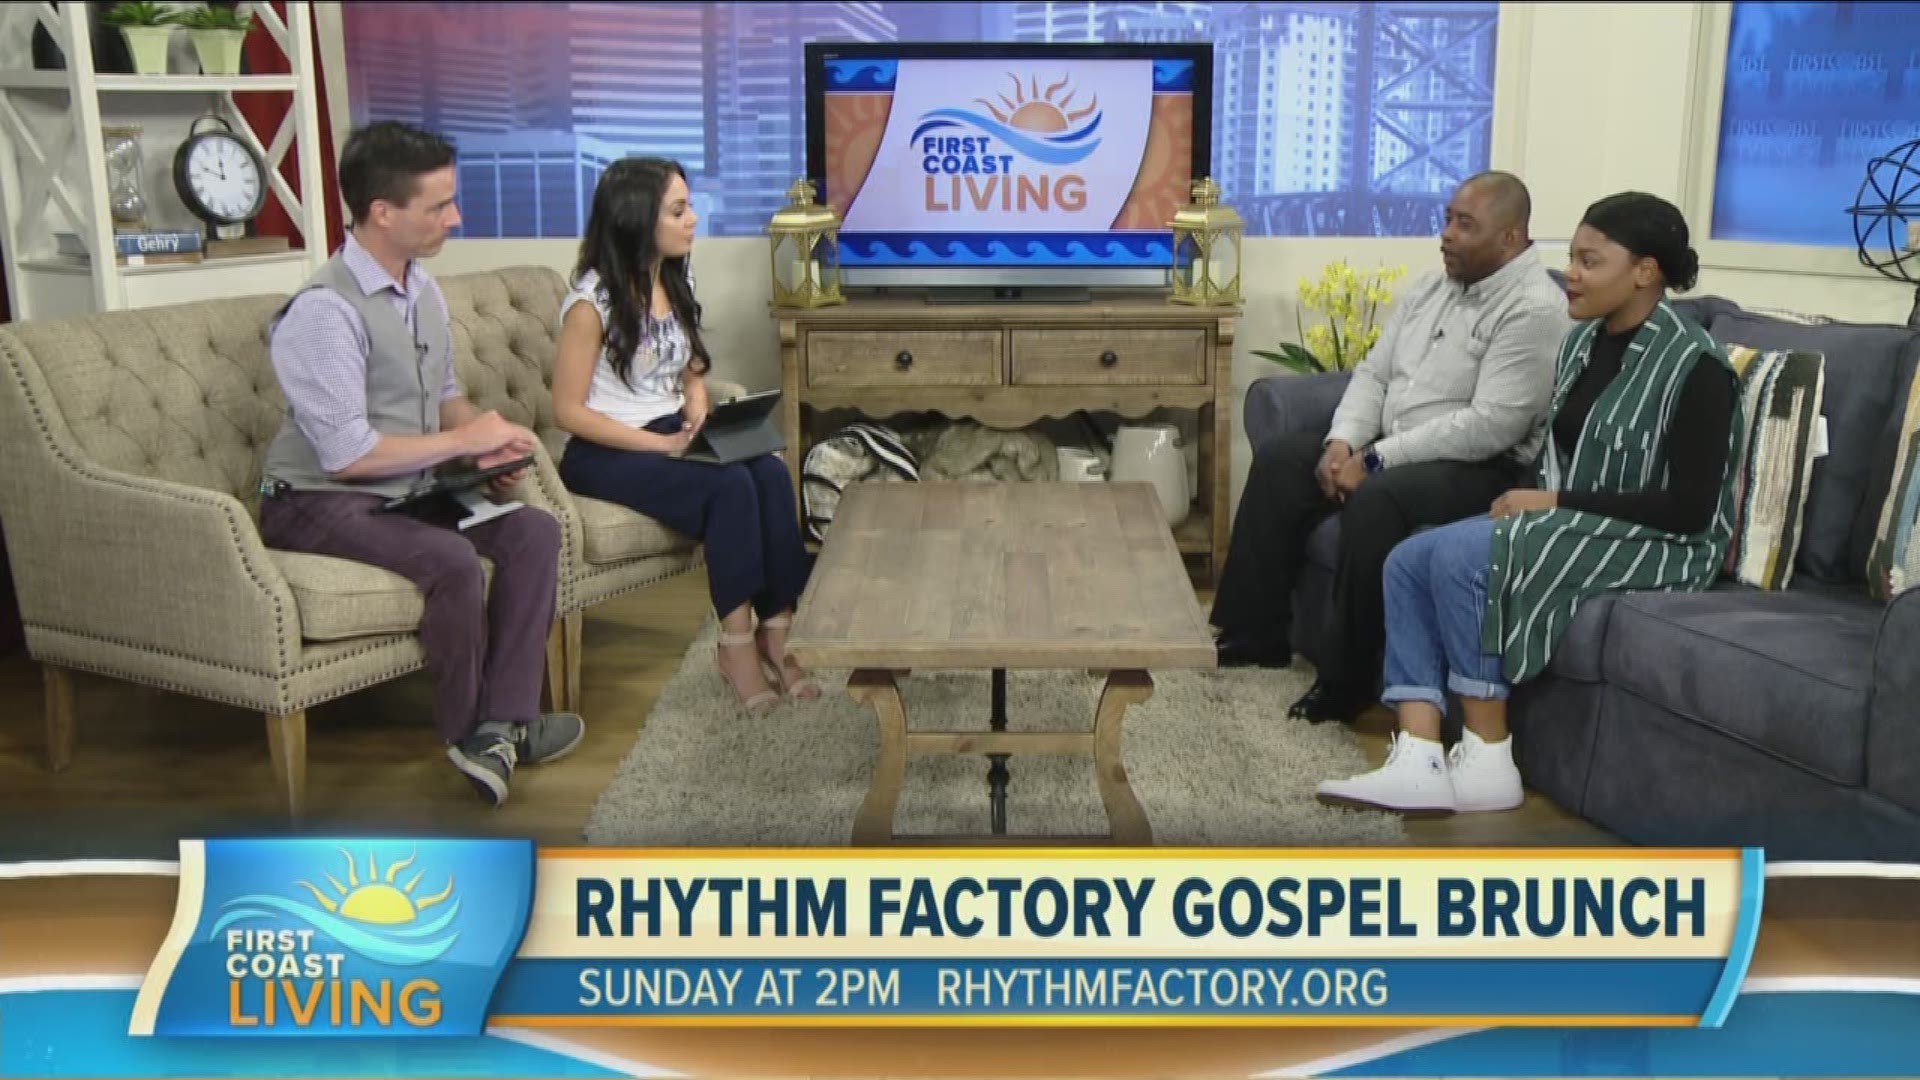 American Idol finalist Tyanna Jones headlines for I Love Music Foundation Gospel Brunch at the Rhythm Factory.